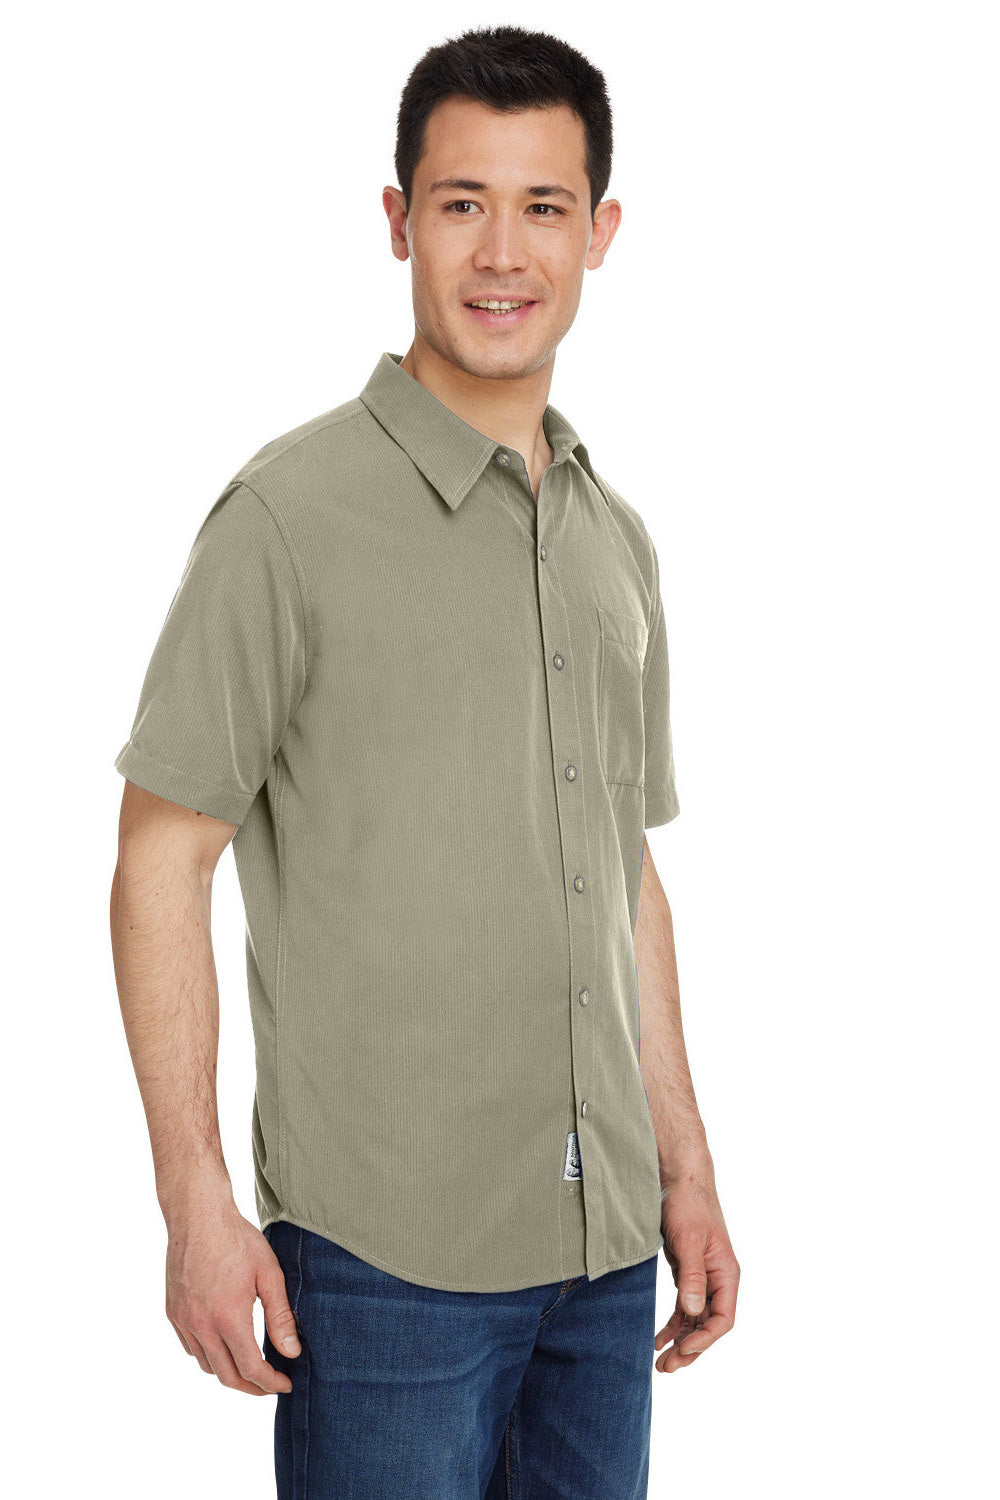 Marmot M14116 Mens Aerobora Short Sleeve Button Down Shirt w/ Pocket Vetiver 3Q